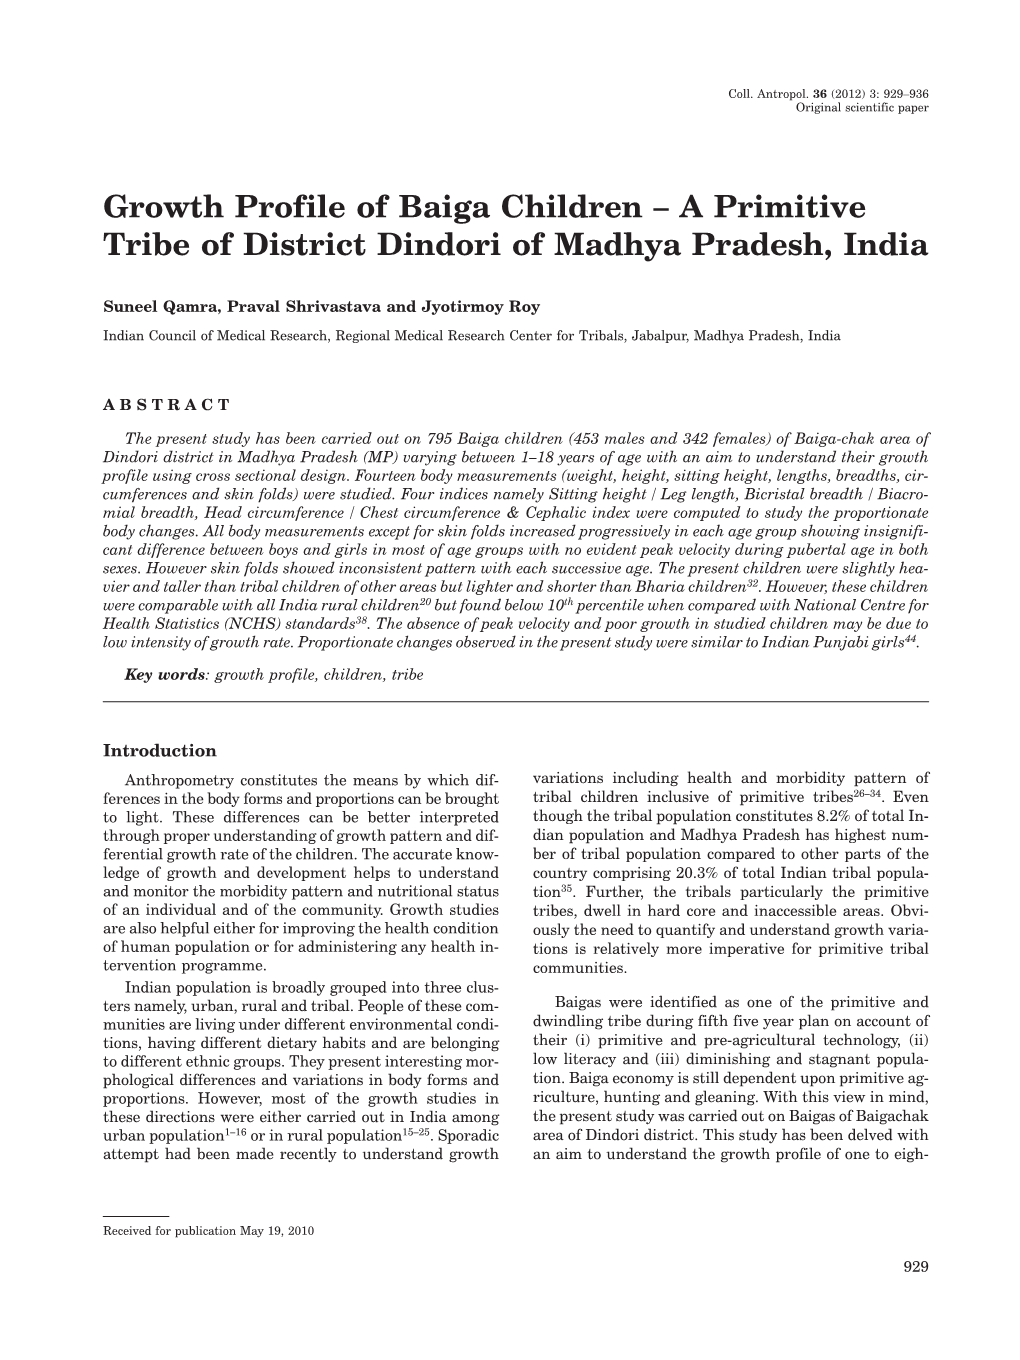 Growth Profile of Baiga Children – a Primitive Tribe of District Dindori of Madhya Pradesh, India